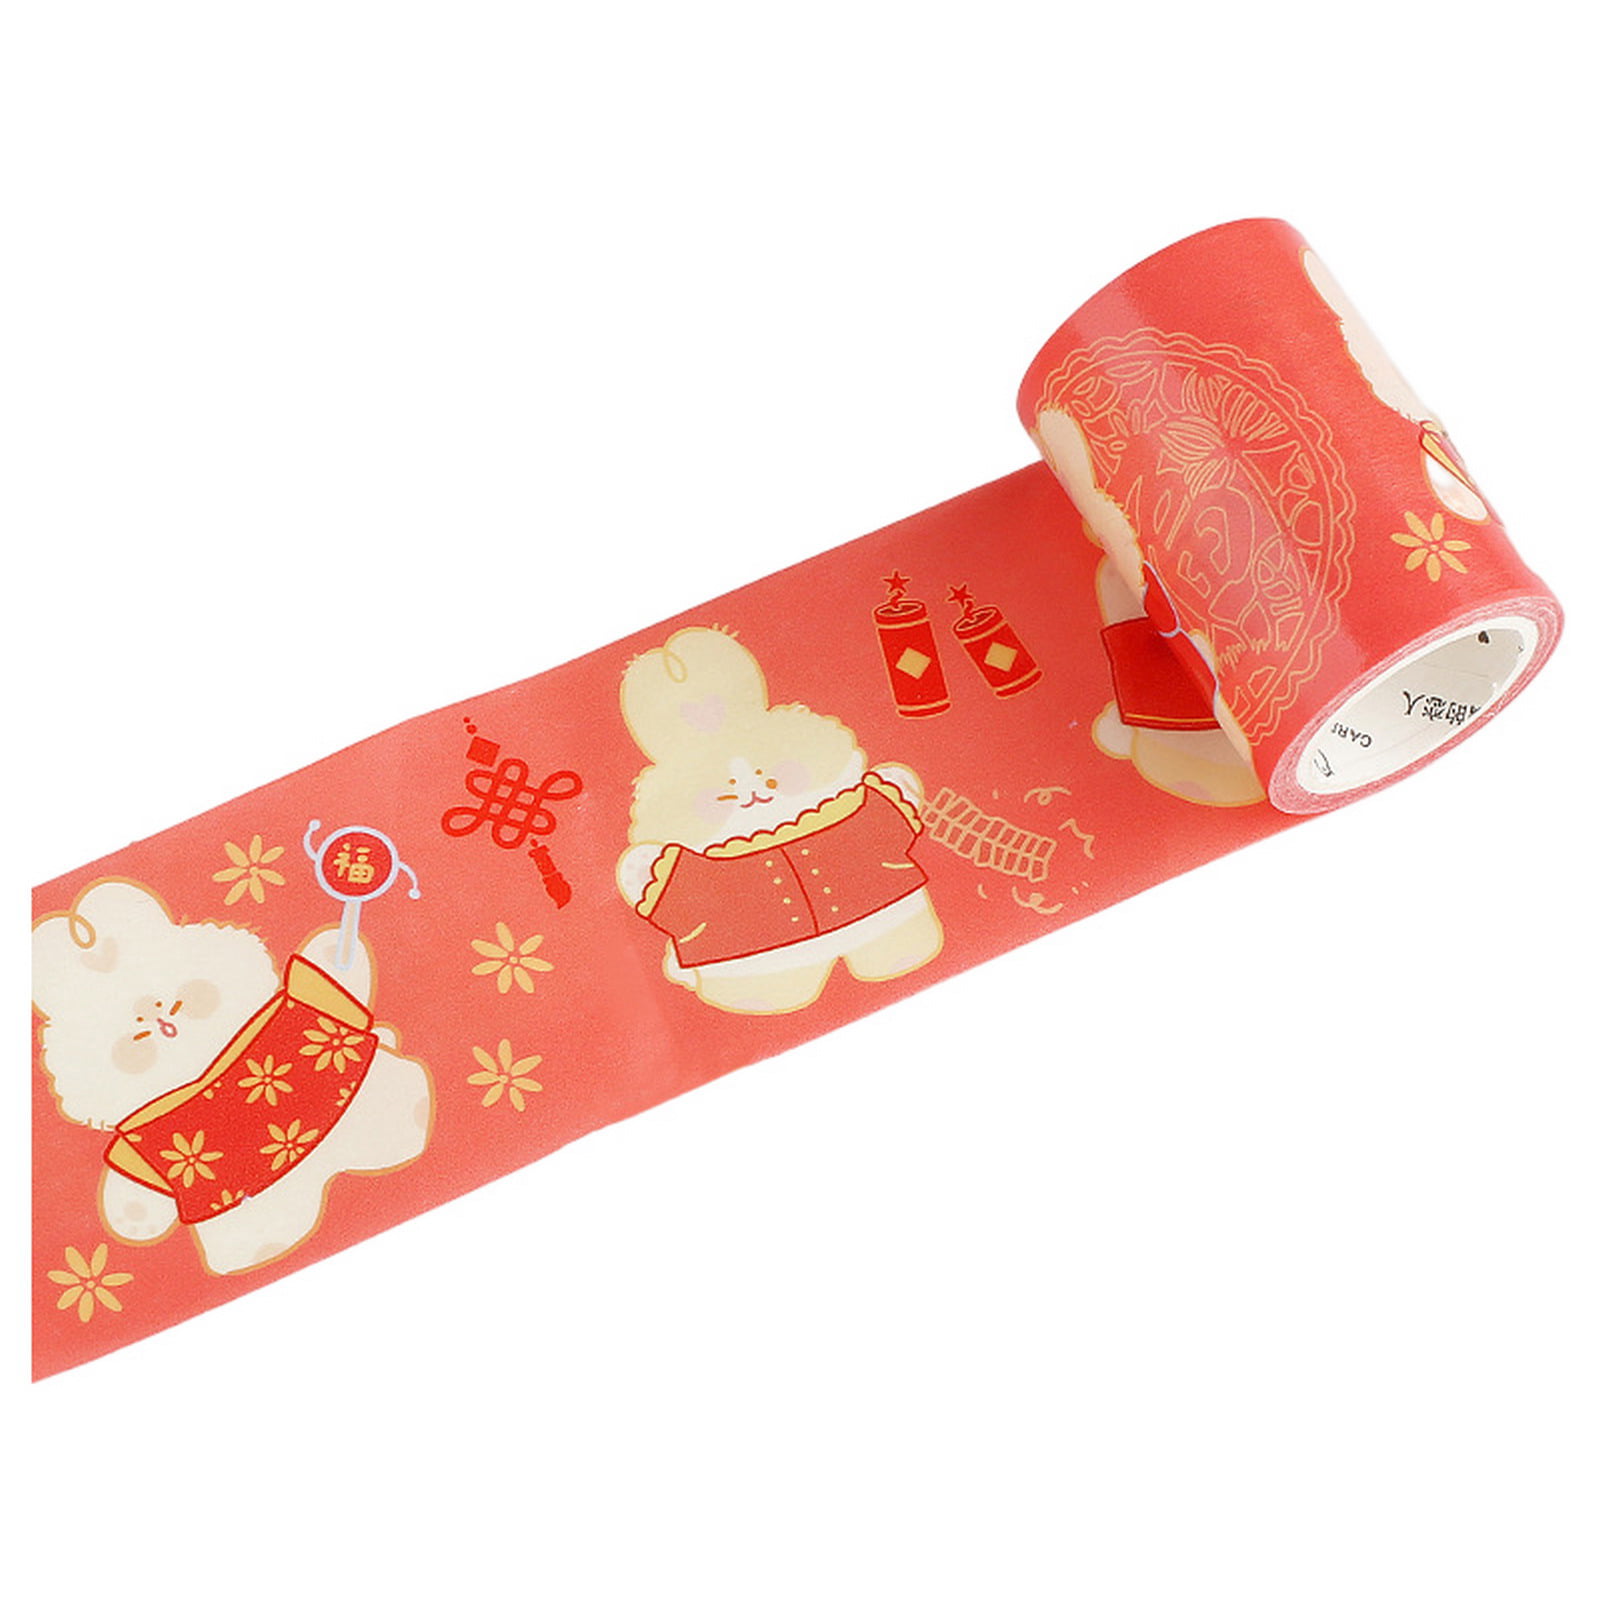 SANWOOD Washi Tape,12 Rolls Washi Masking Tapes Set Japanese Decorative  Writable Vintage Sticker Gift for DIY Crafts Arts Scrapbooking Journal